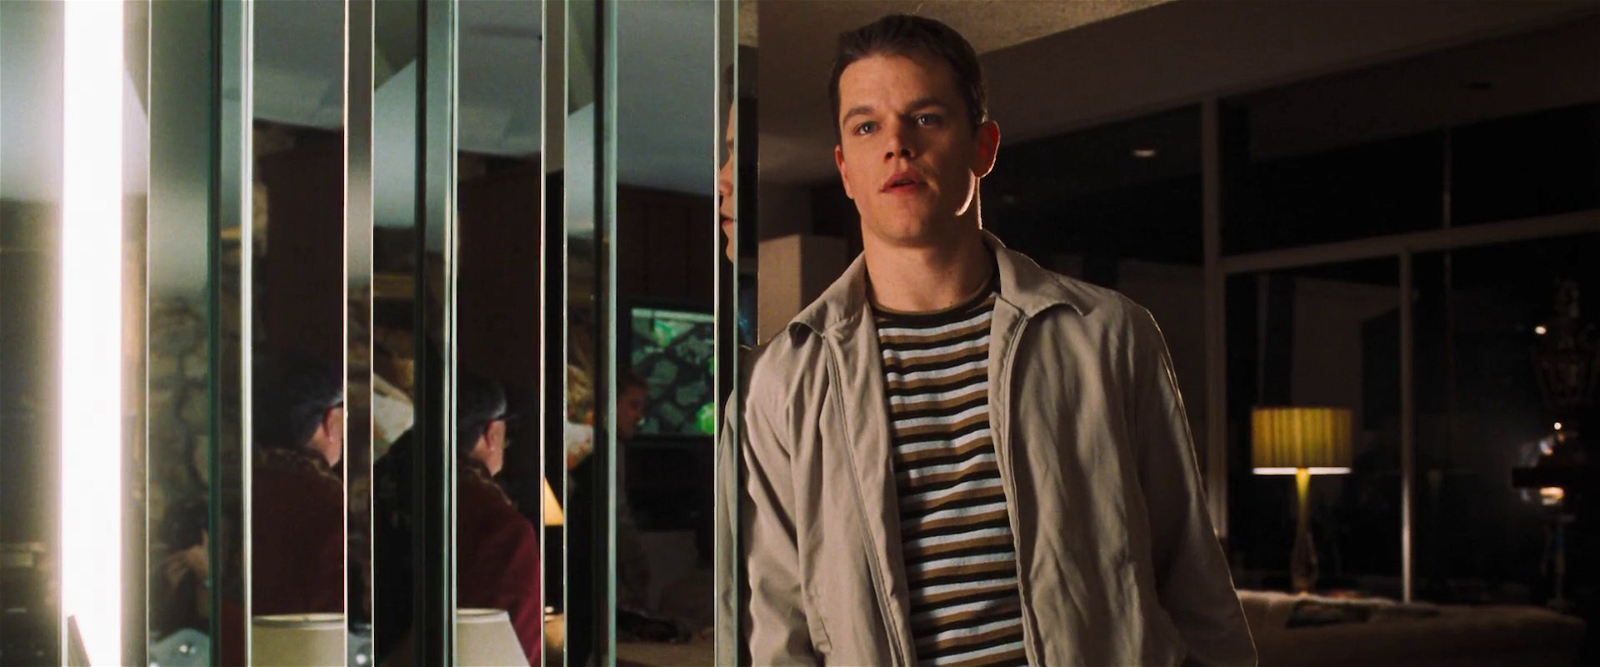 Matt Damon as Linus Caldwell in Ocean's Eleven (2001)